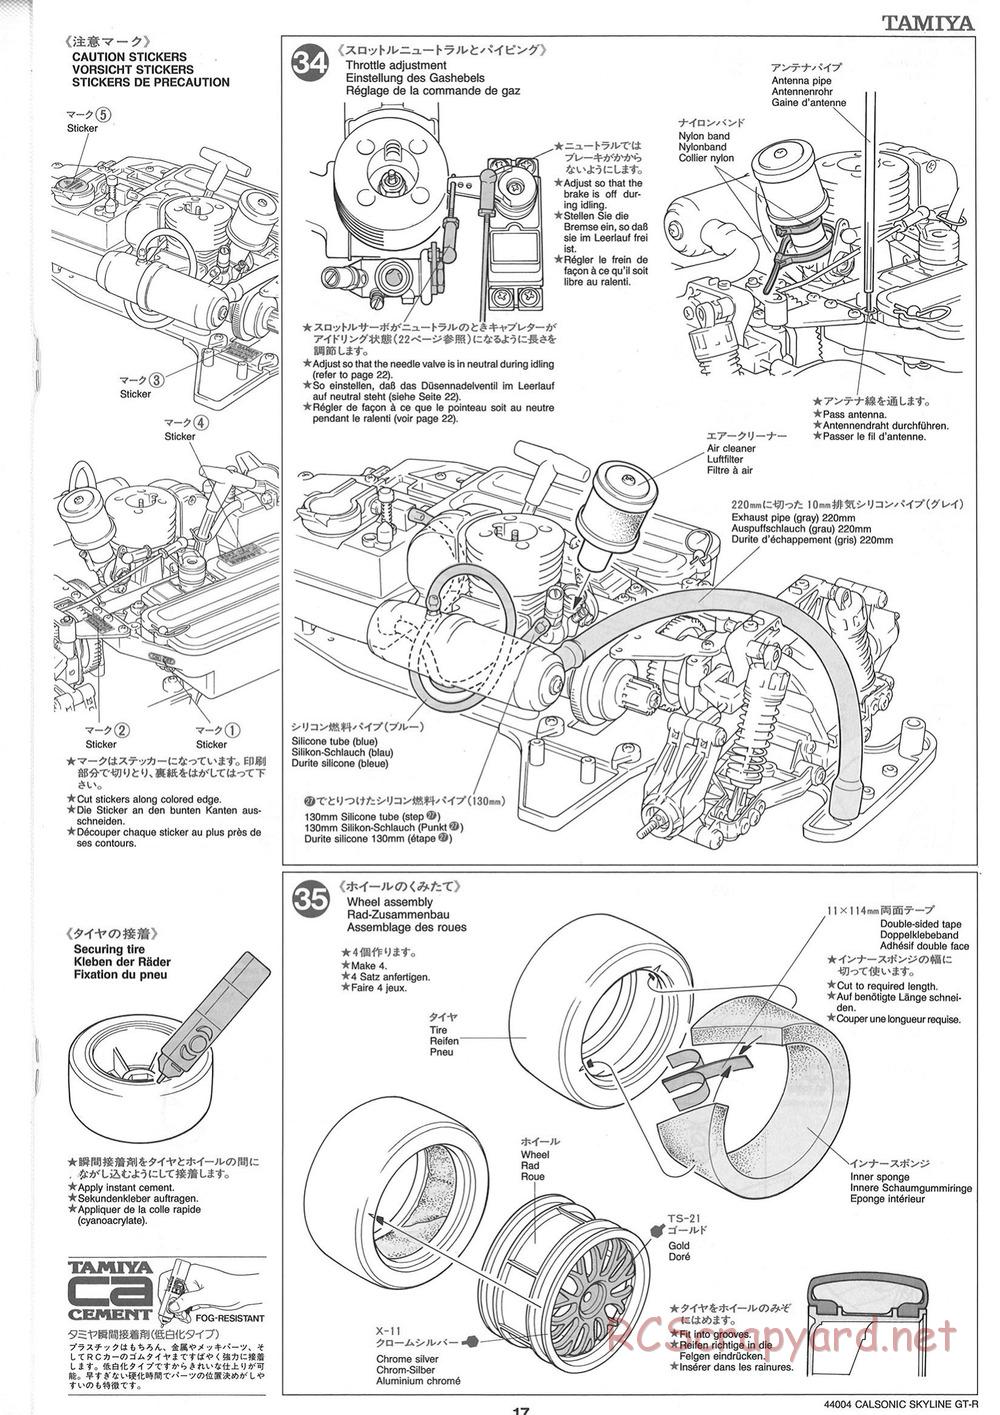 Tamiya - Calsonic GT-R - TGX Mk.1 Chassis - Manual - Page 17